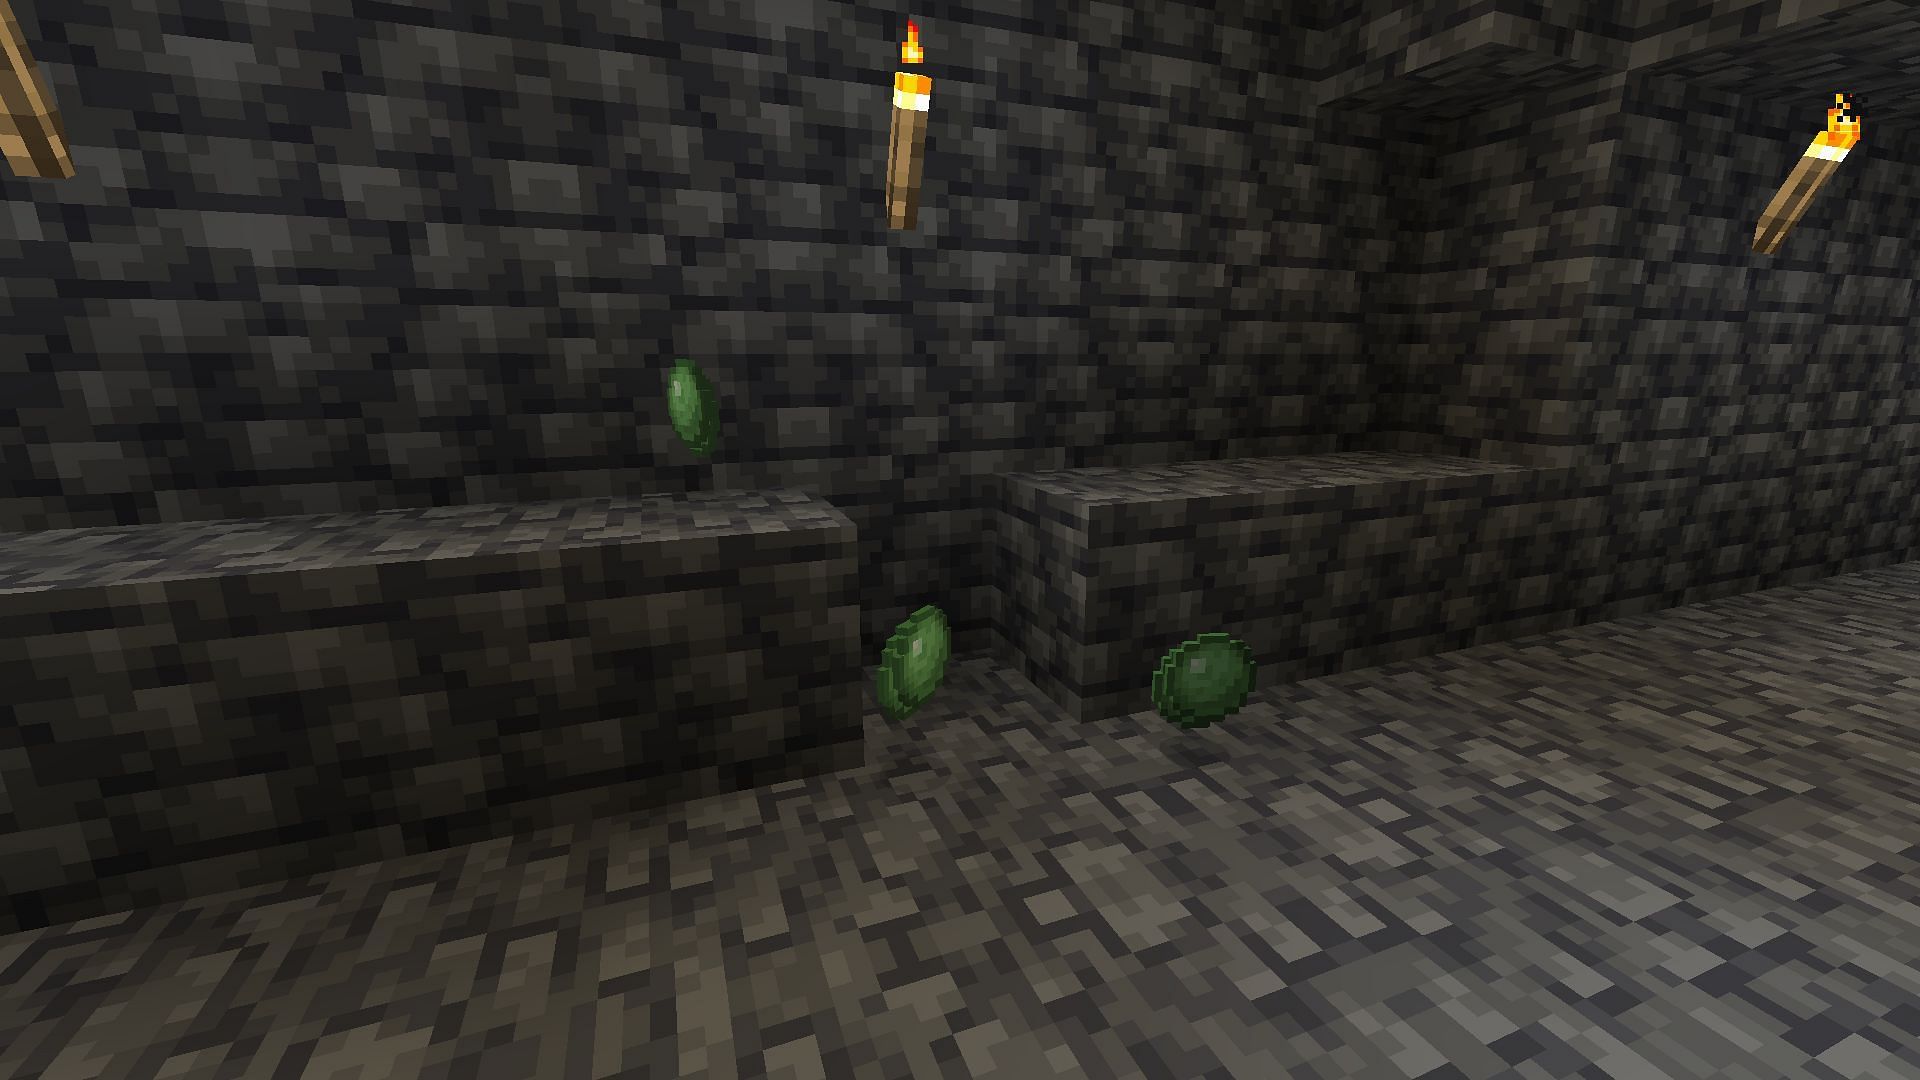 Nine slime balls dropped from 3 tiny slimes (Image via Minecraft)